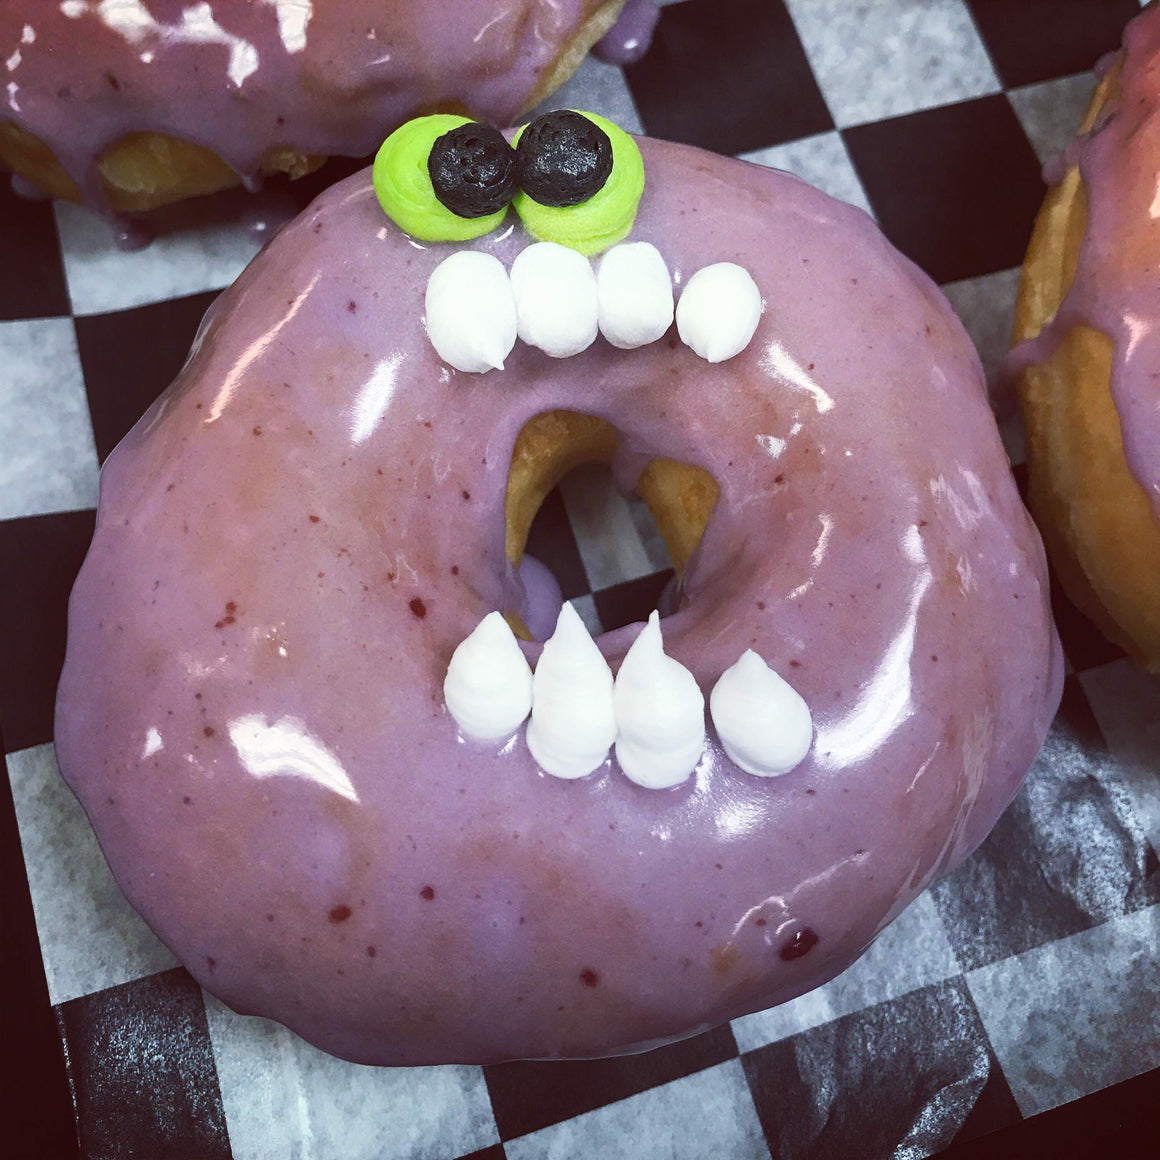 Count Grape-ula Donut